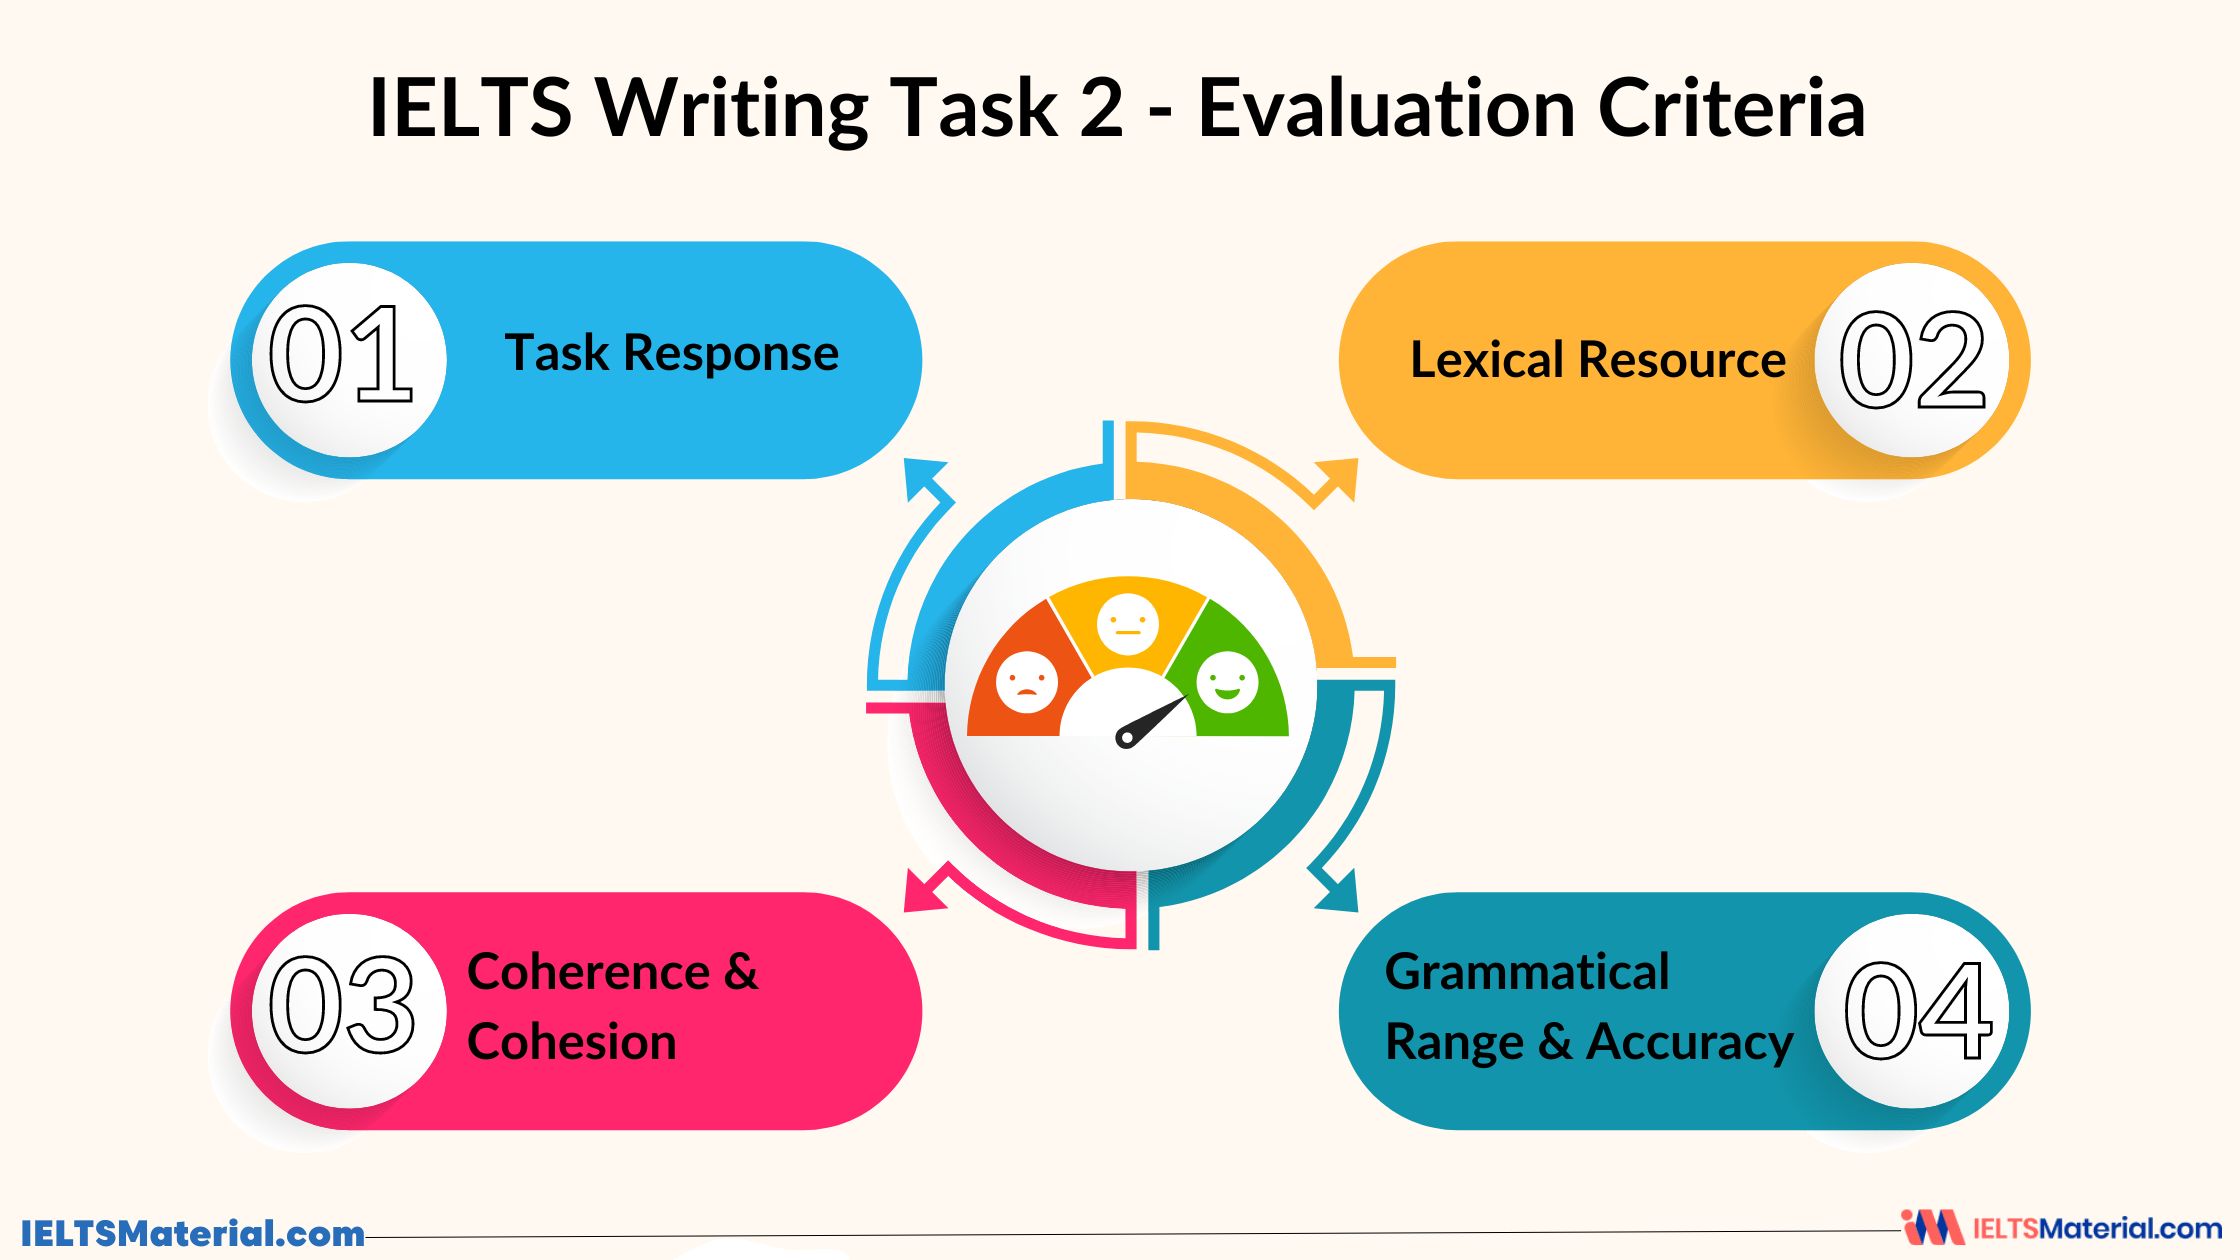 IELTS Writing task 2 evaluation criteria